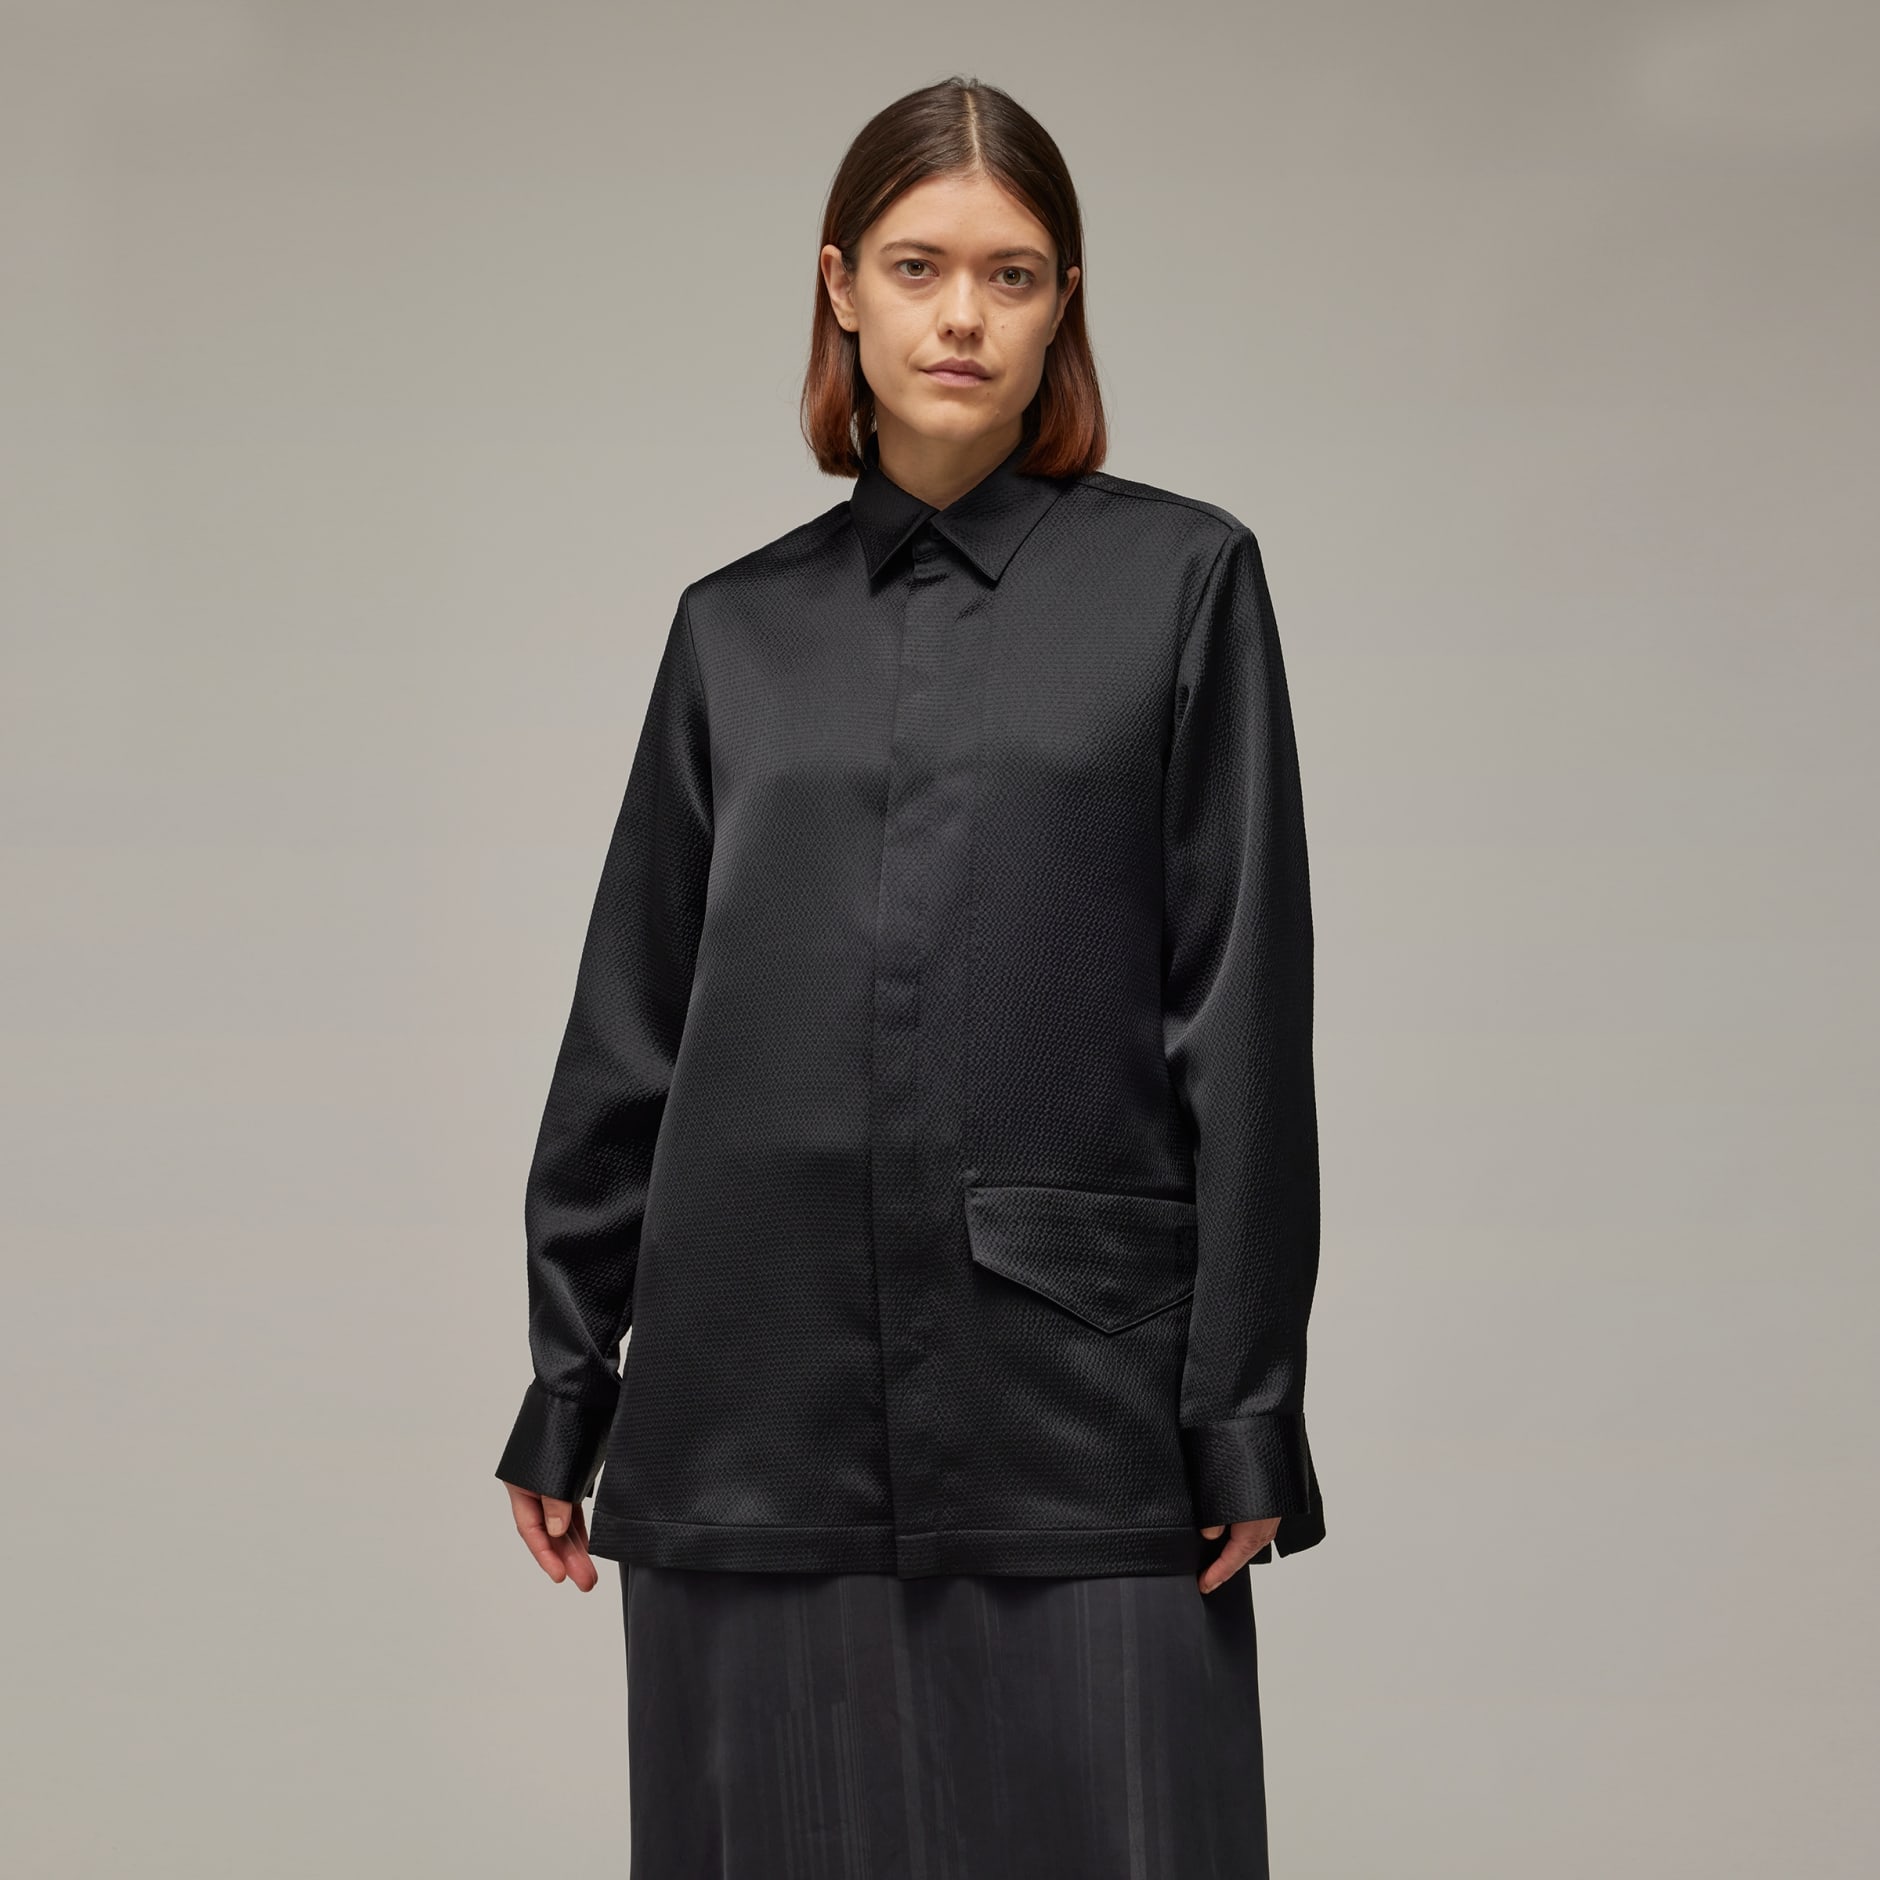 Clothing - Y-3 Tech Seersucker Shirt - Black | adidas South Africa